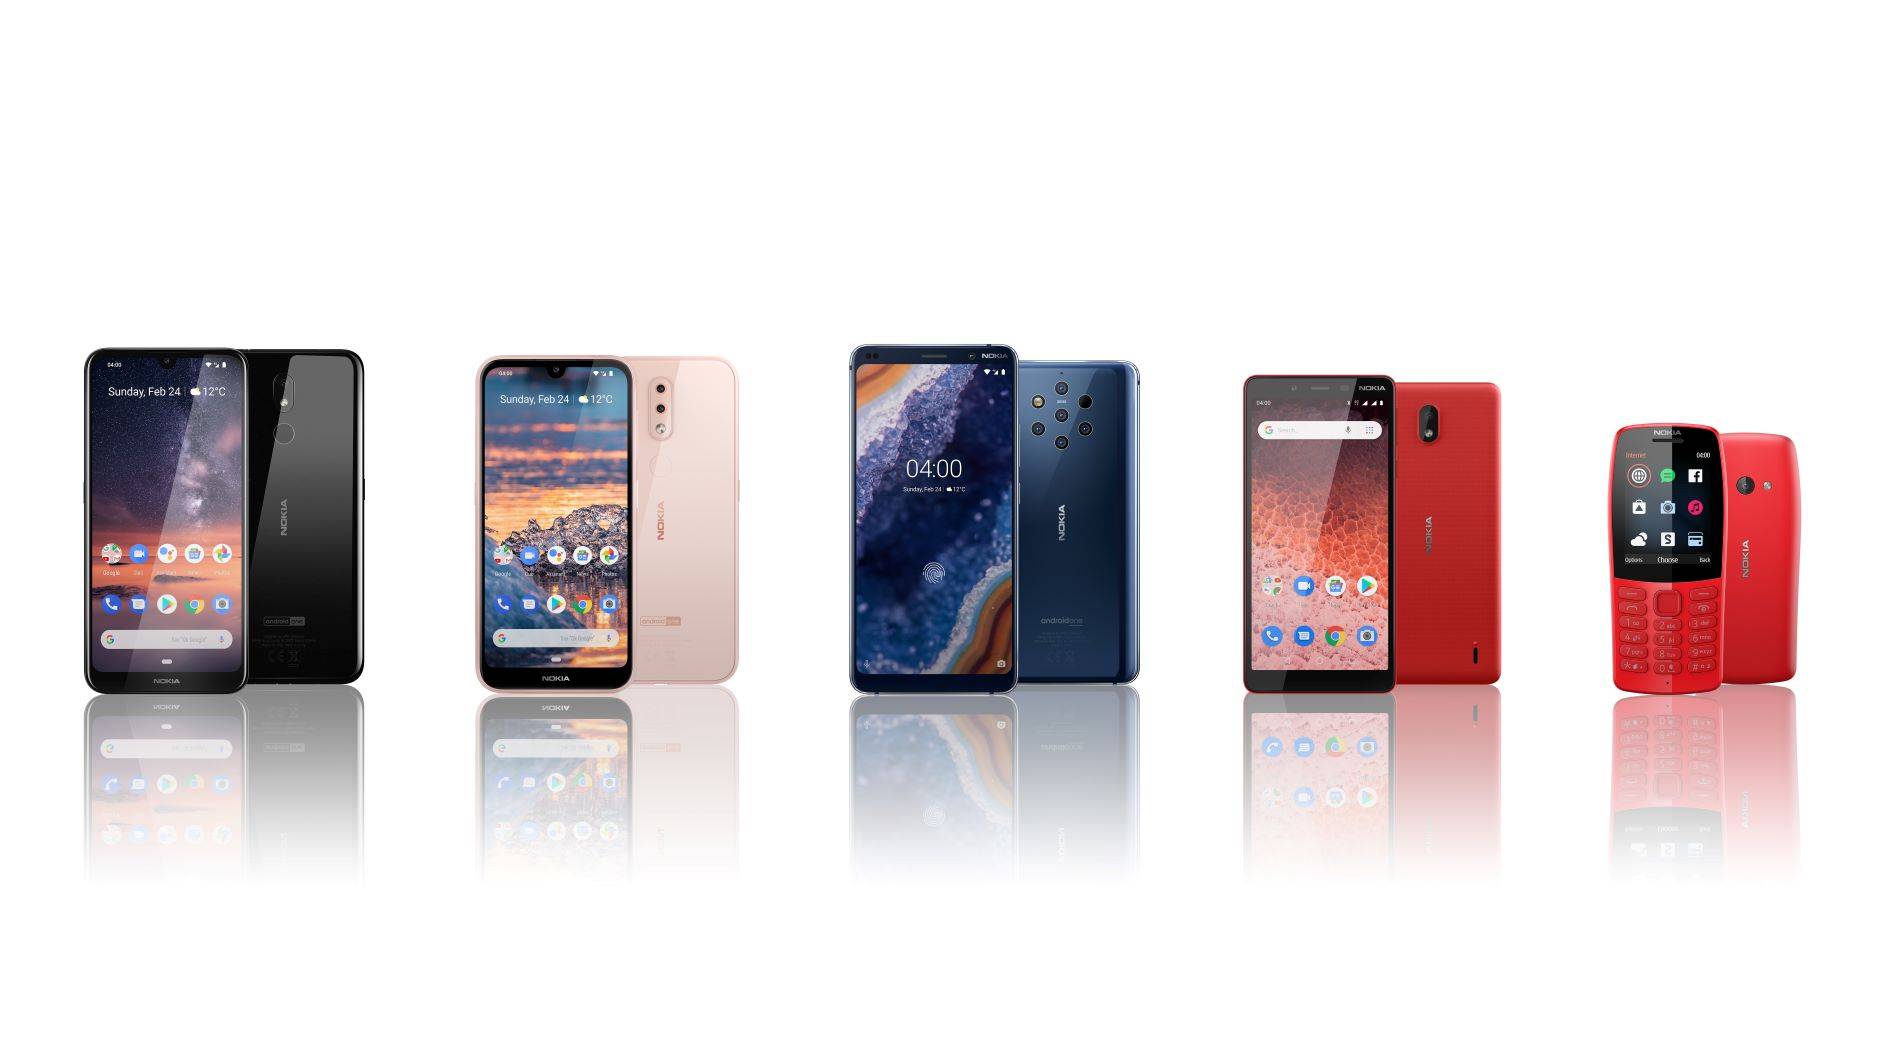 Nokia Phone Lineup 5UP RGB 16 9 V2 WHITE1 | Technea.gr - Χρήσιμα νέα τεχνολογίας